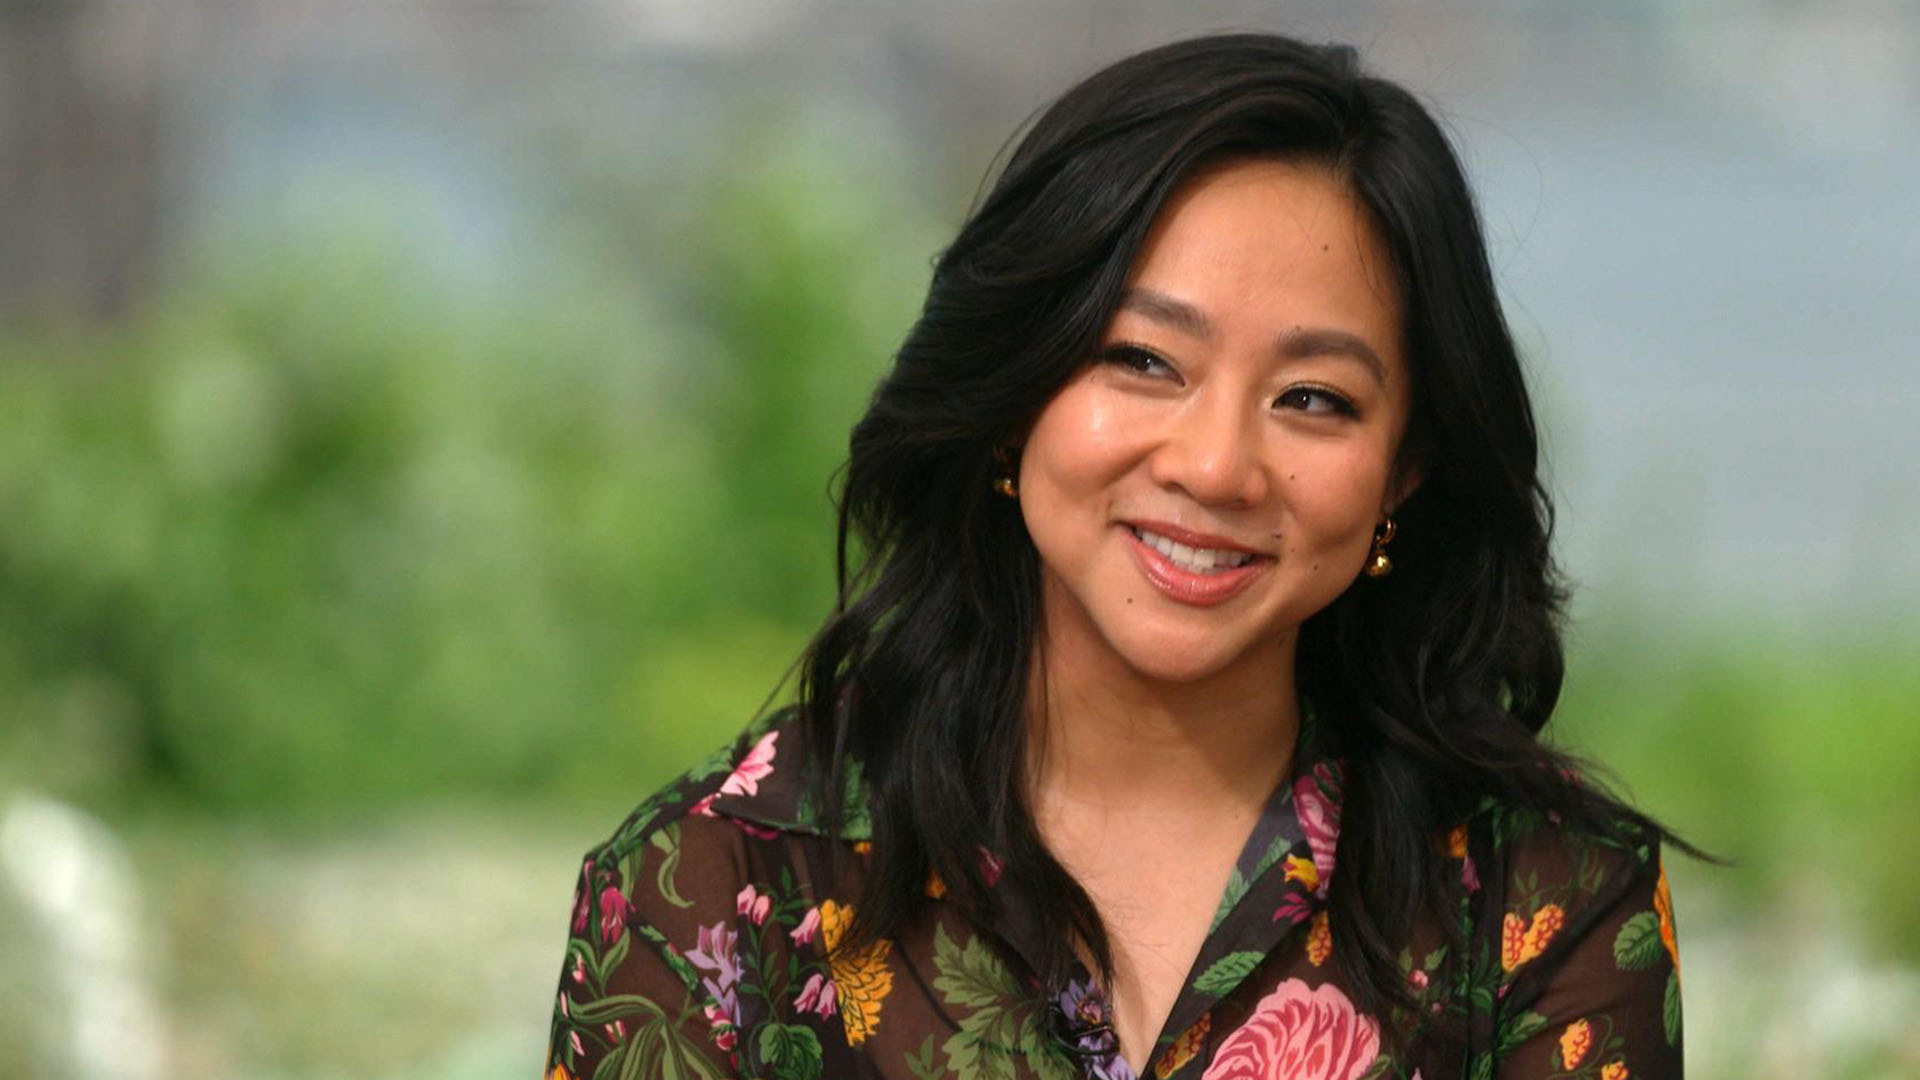 Watch CBS Mornings: Stephanie Hsu on her career and love of art - Full ...